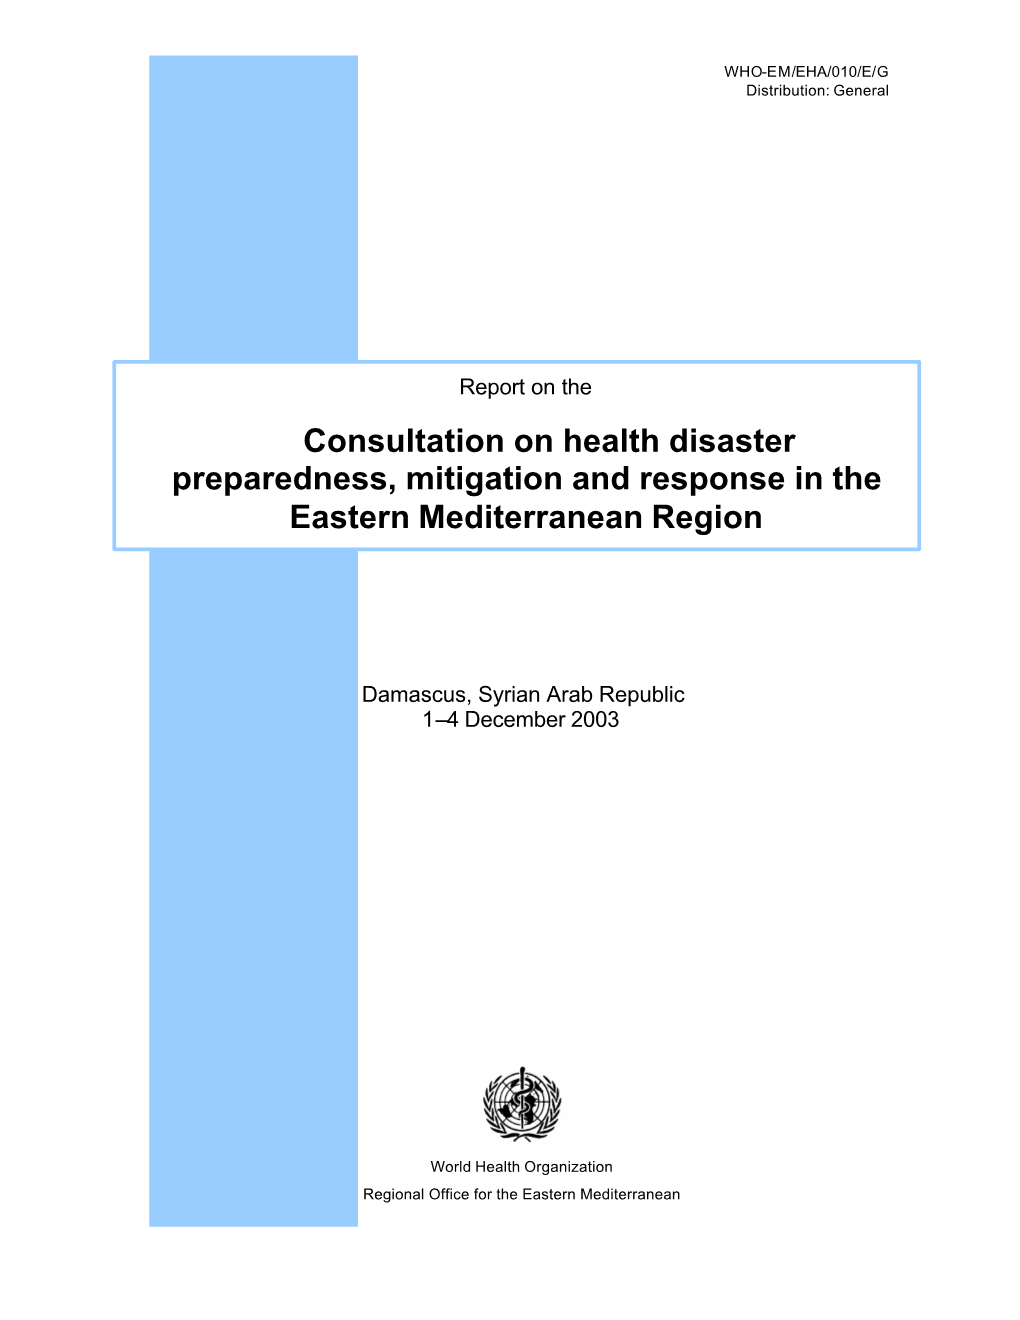 Consultation on Health Disaster Preparedness, Mitigation and Response in the Eastern Mediterranean Region